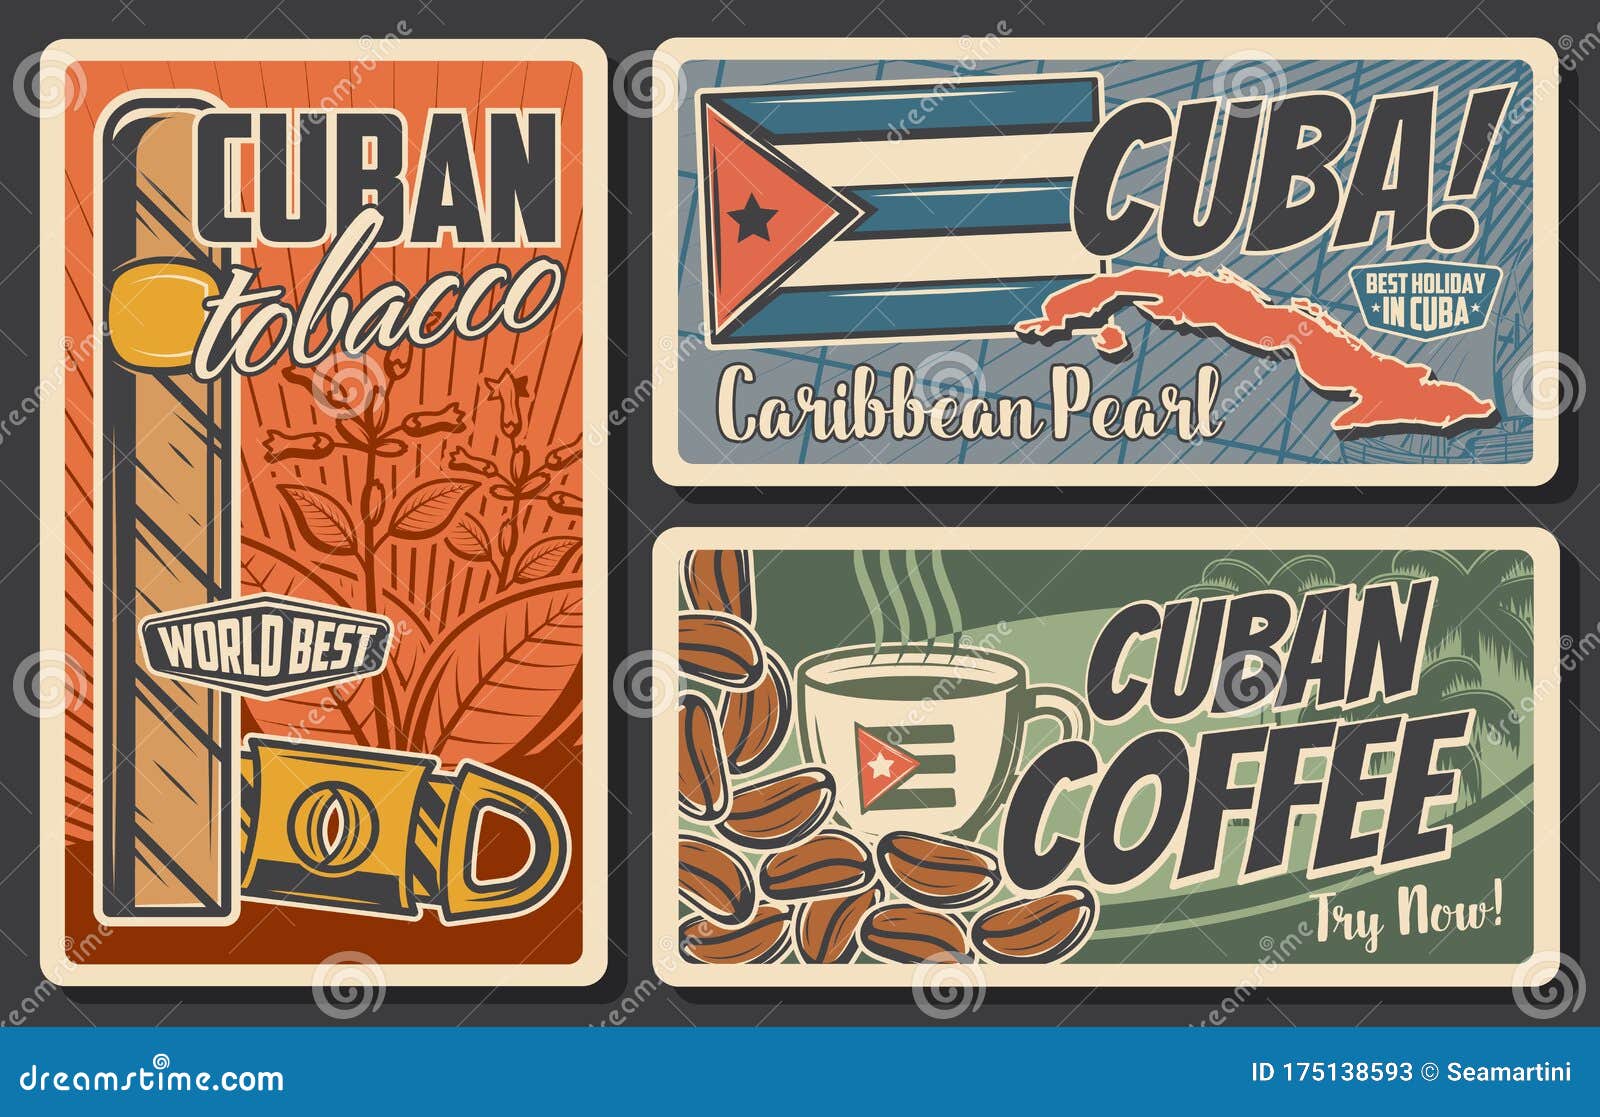 Vintage Nostalgic Travel Poster "CUBA" Holiday Vacation Retro re-print 